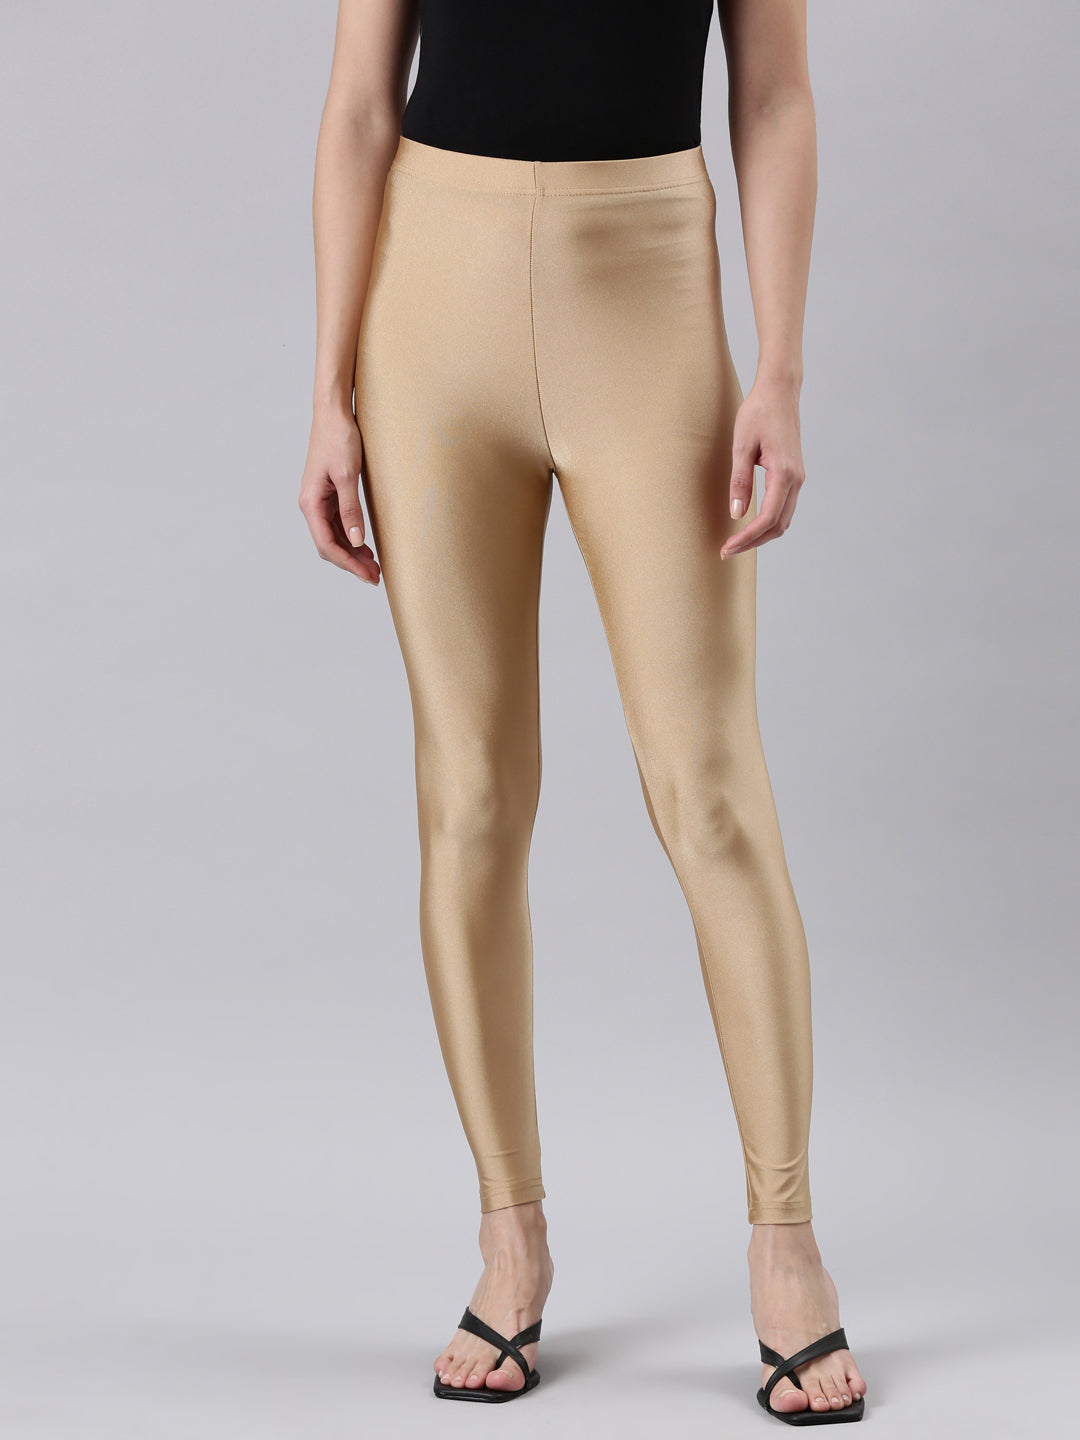 Metallic Leggings Stretchy Pants Neon Fluro Shiny Glossy Dress Up Dance  Party | eBay